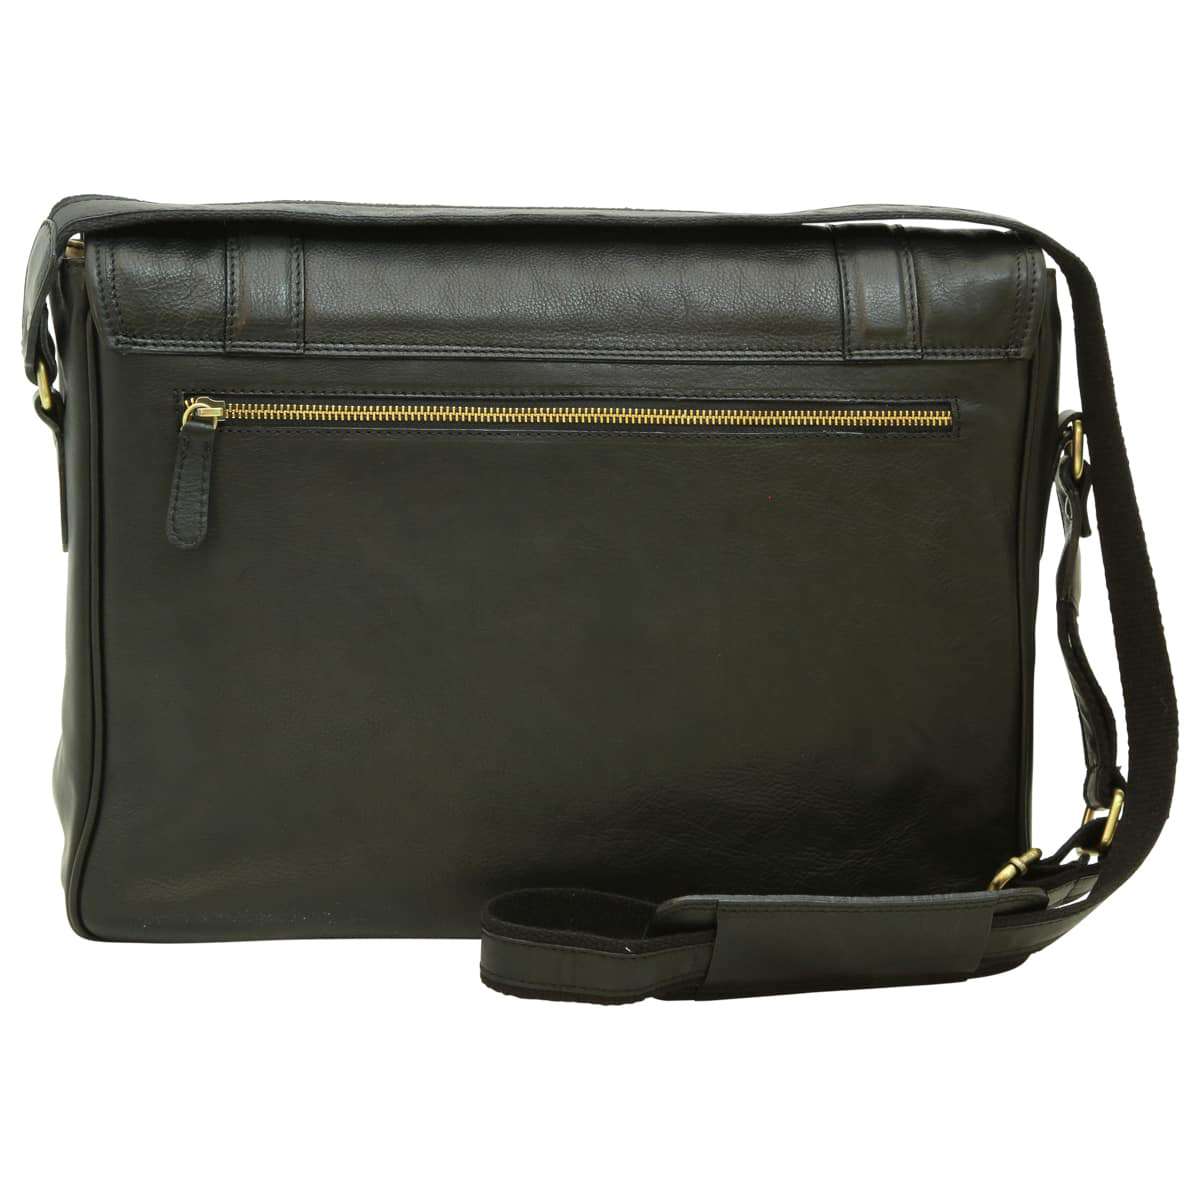 Soft Calfskin Leather Messenger Bag - Black | 030491NE UK | Old Angler Firenze